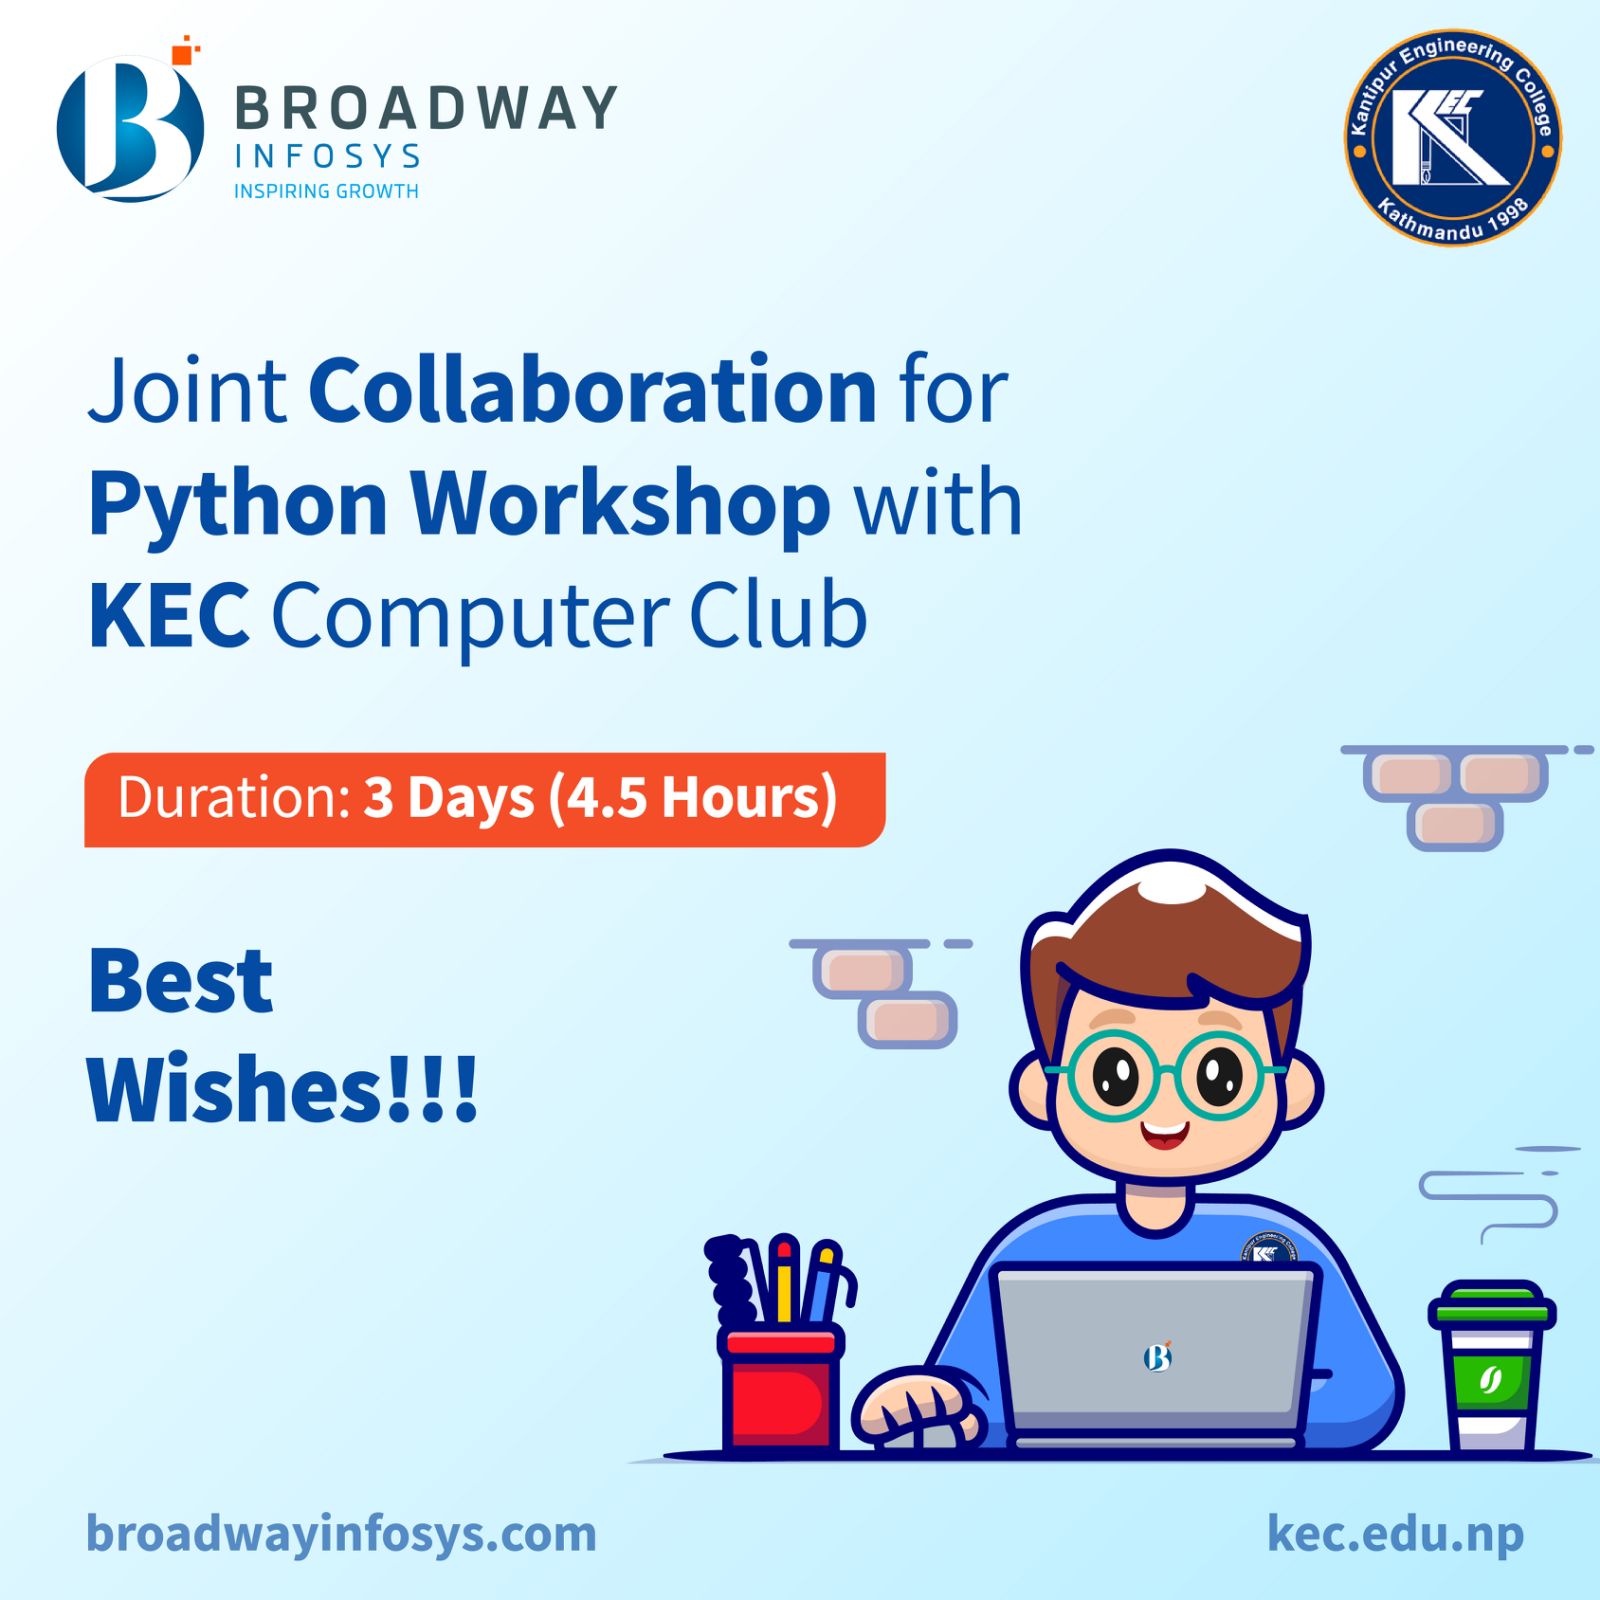 Broadway Infosys Free Python Programming Workshop